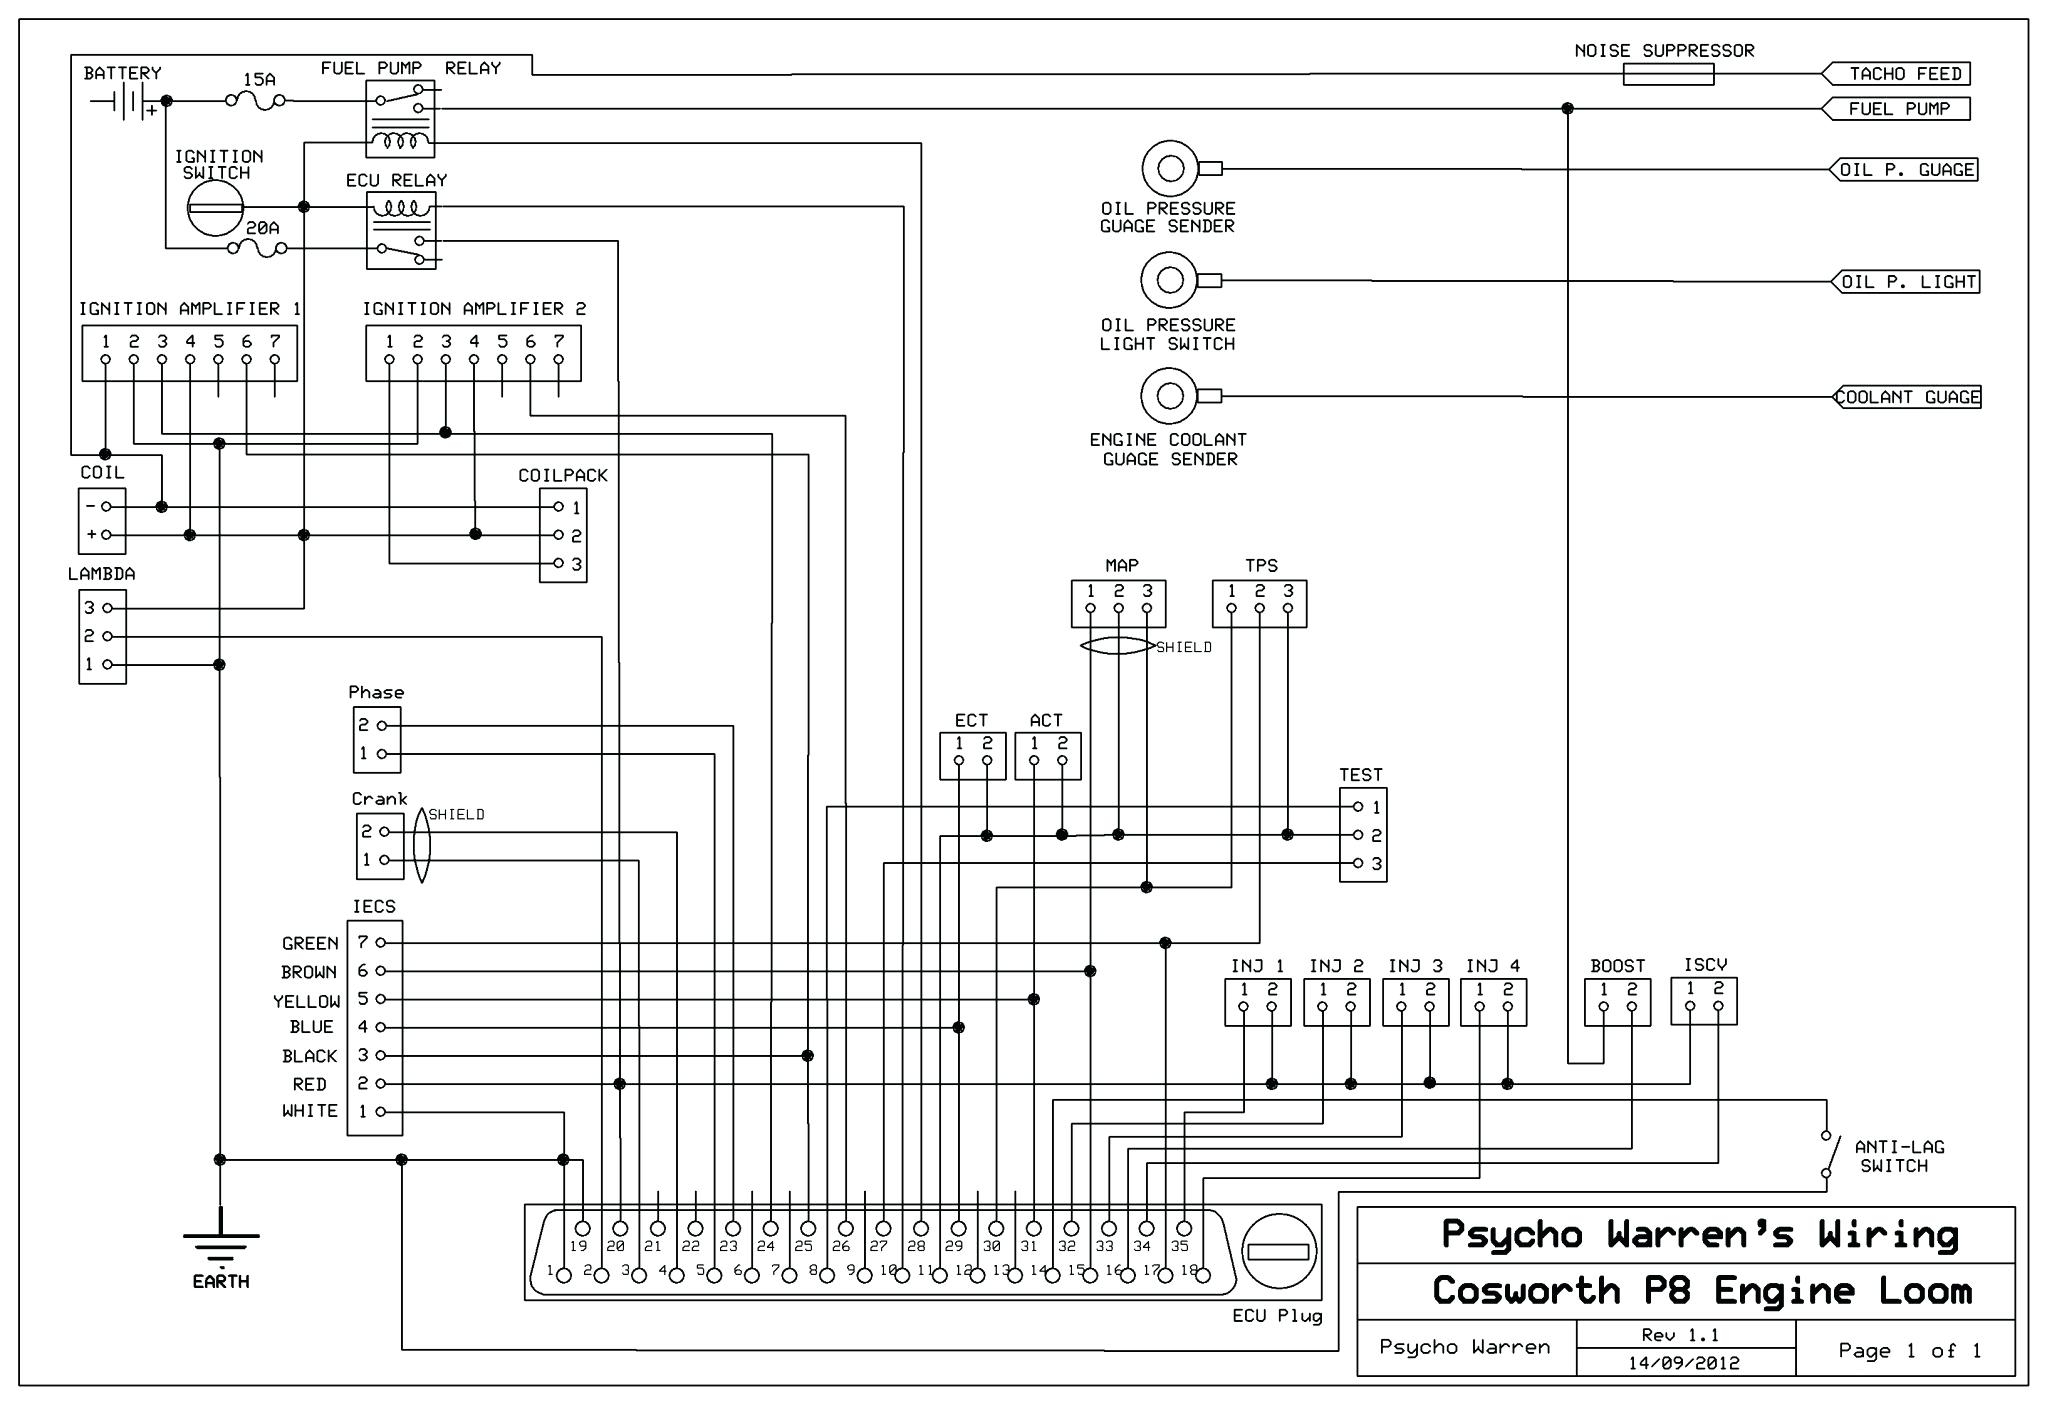 1941 Ford Tractor Wiring Diagram | Wiring Diagram - 9N Ford Tractor Wiring Diagram